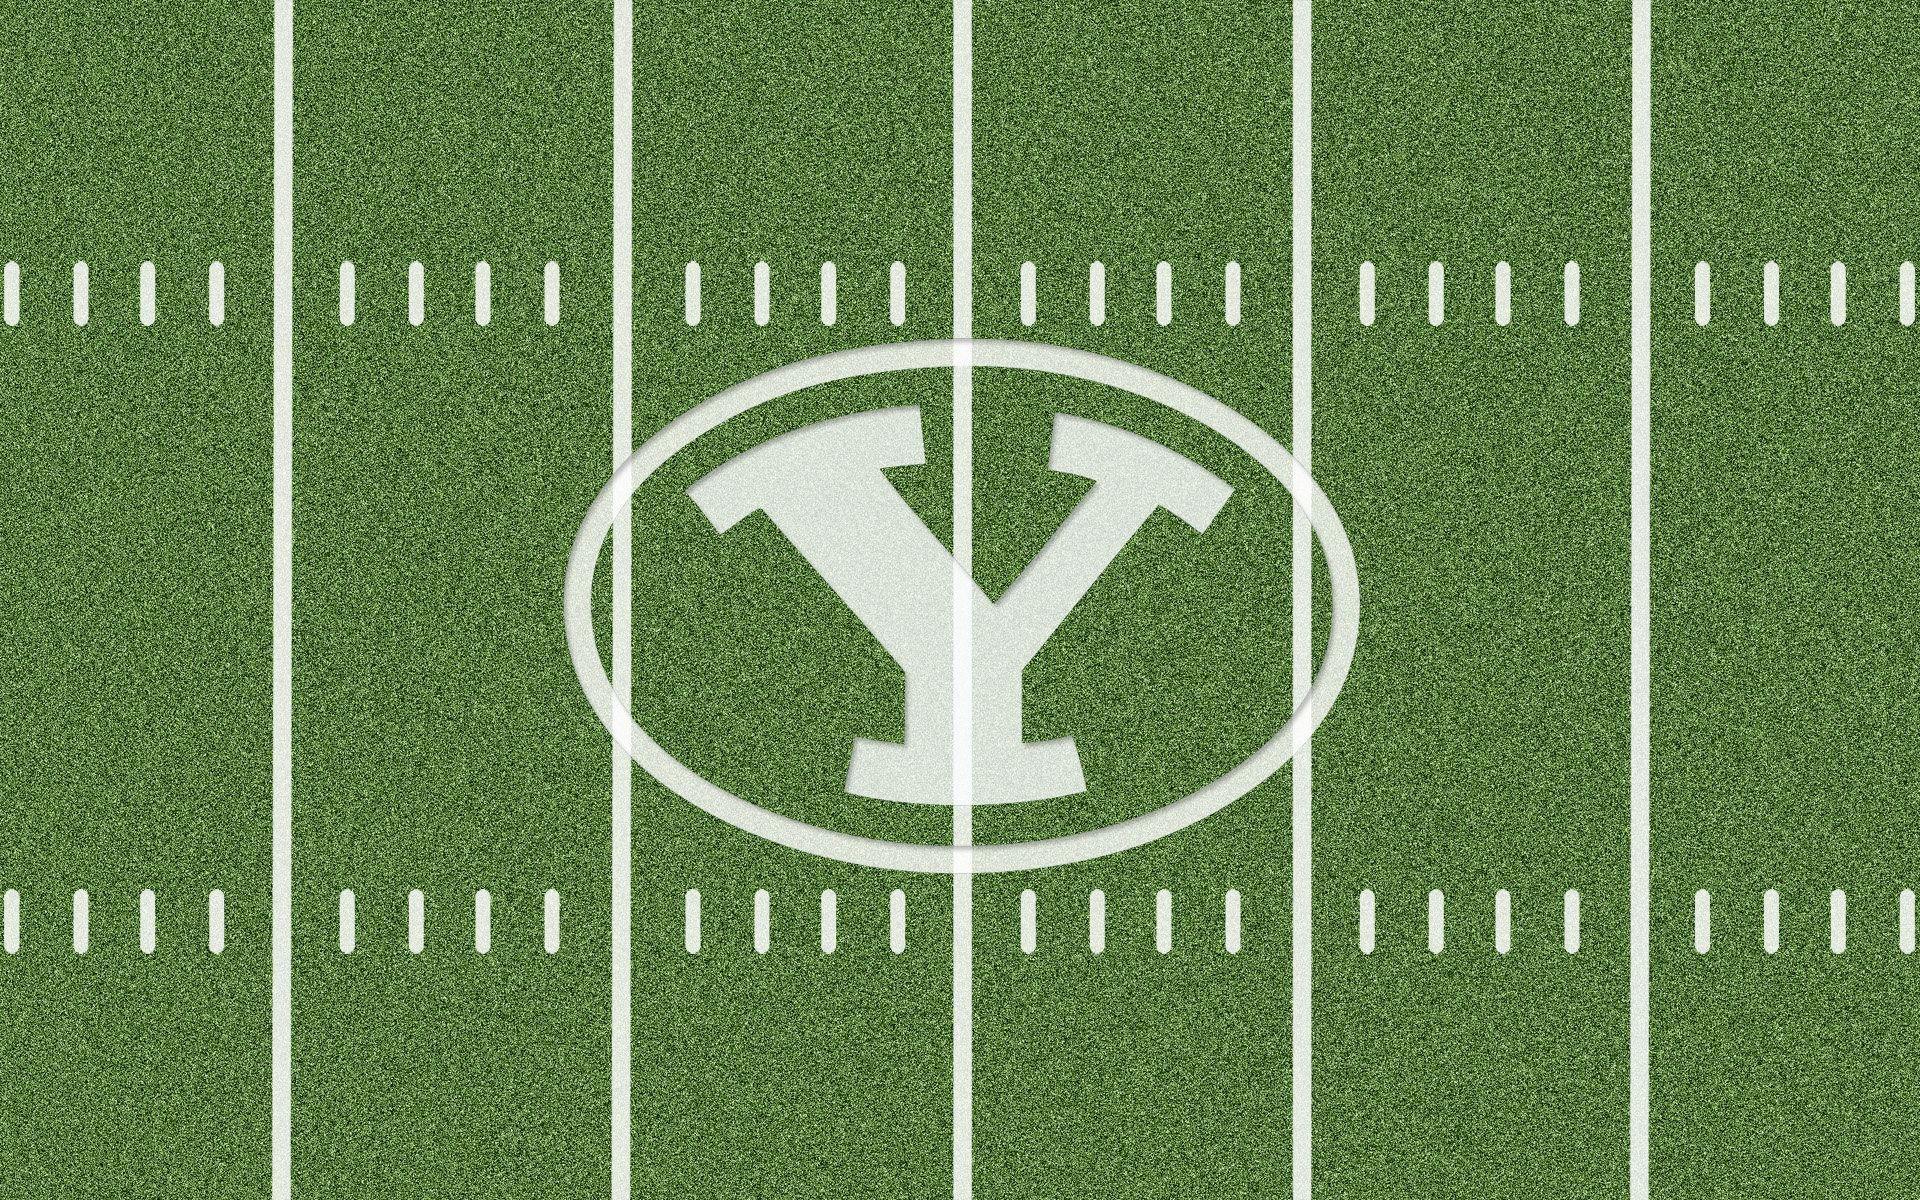 Football Field Byu Cougars Logo On HD Desktop Background Image